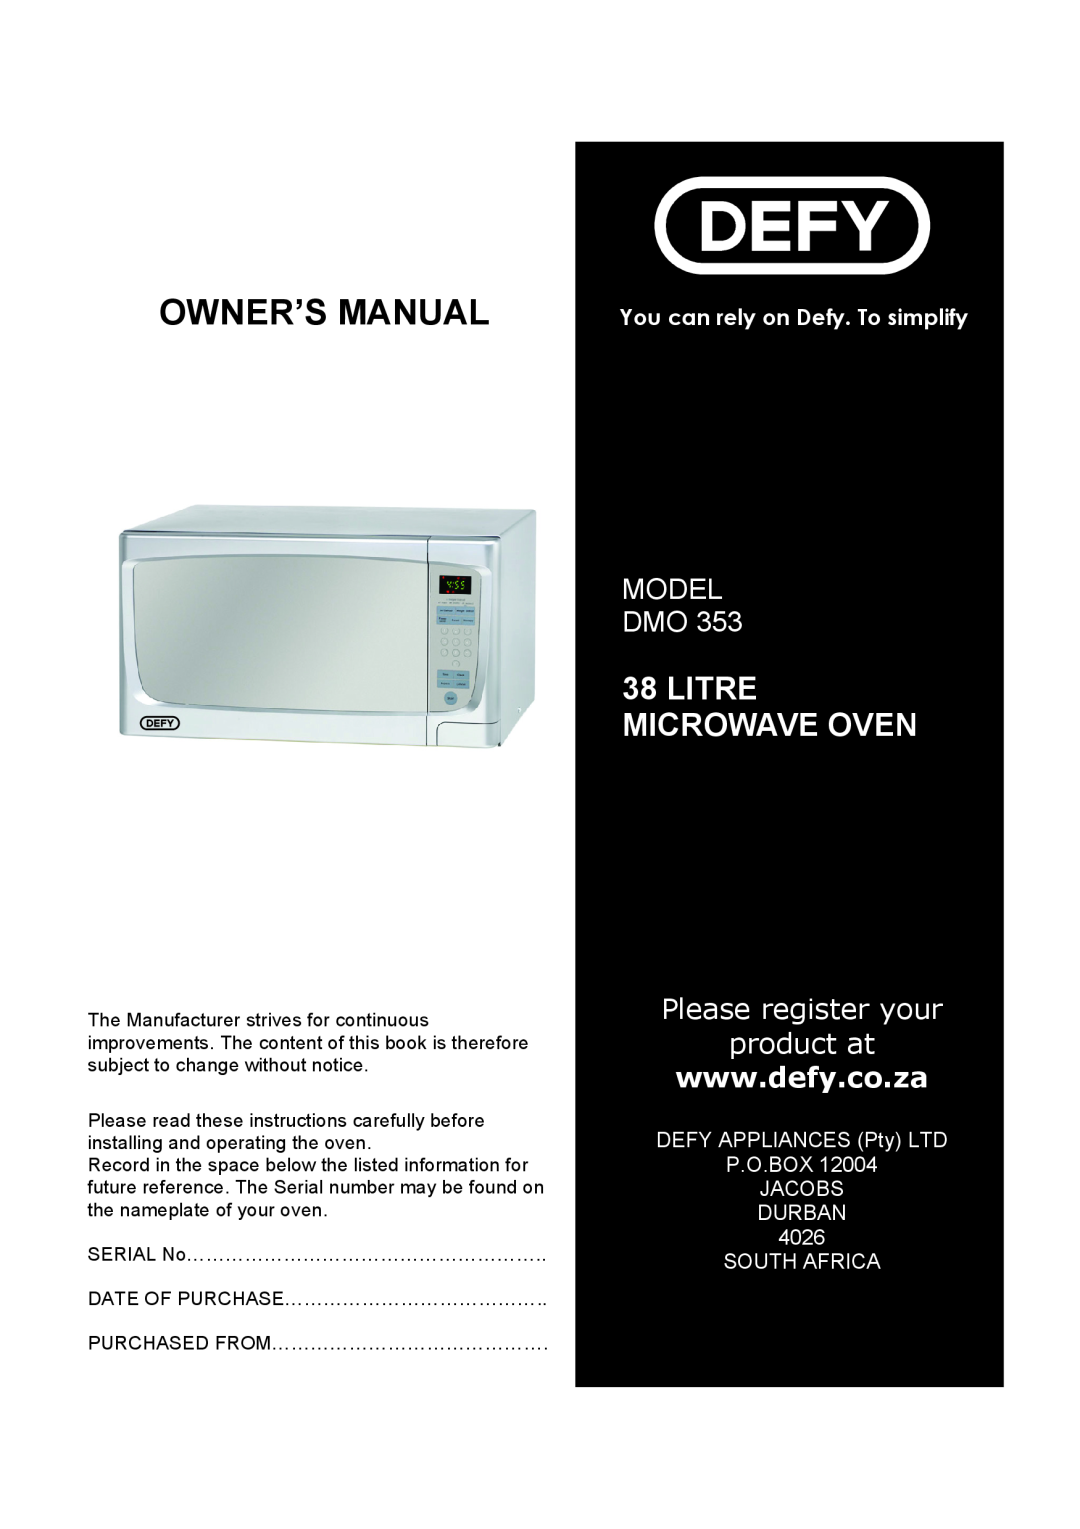 Defy Appliances DMO 353 manual #$%&%*$*+*,-$+.*.&,&.+, +13$.#%&4$5,#.&.,$, 888888888888888888 